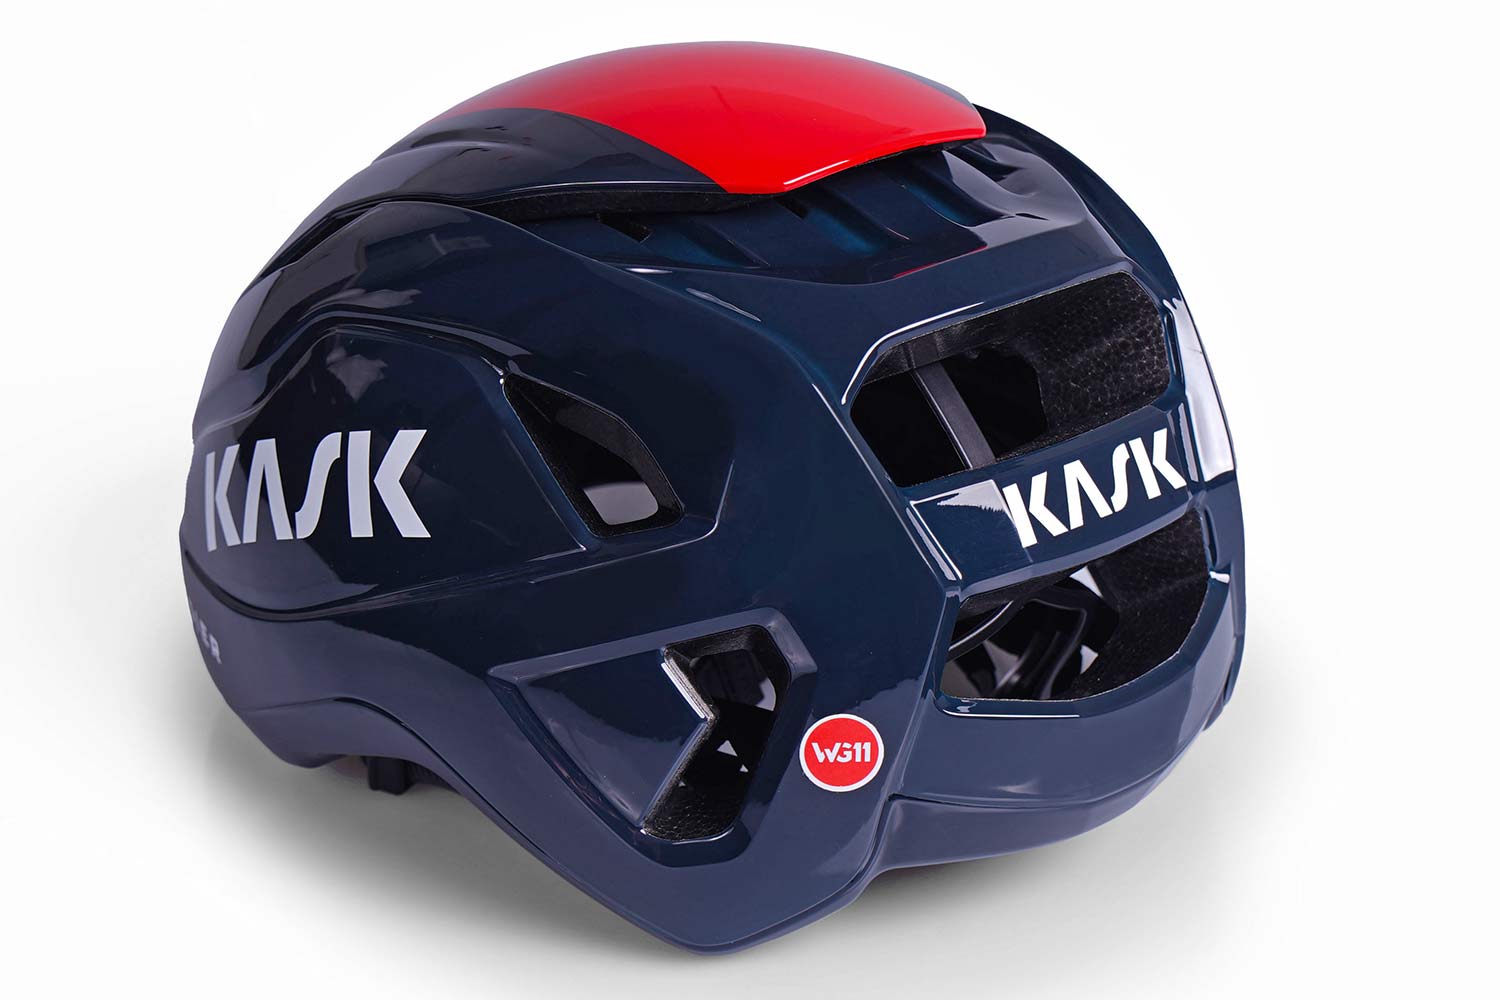 Kask-Wasabi-aero-road-helmet_adjustable-venting-aerodynamics-merino-padding_rear-vents..jpg